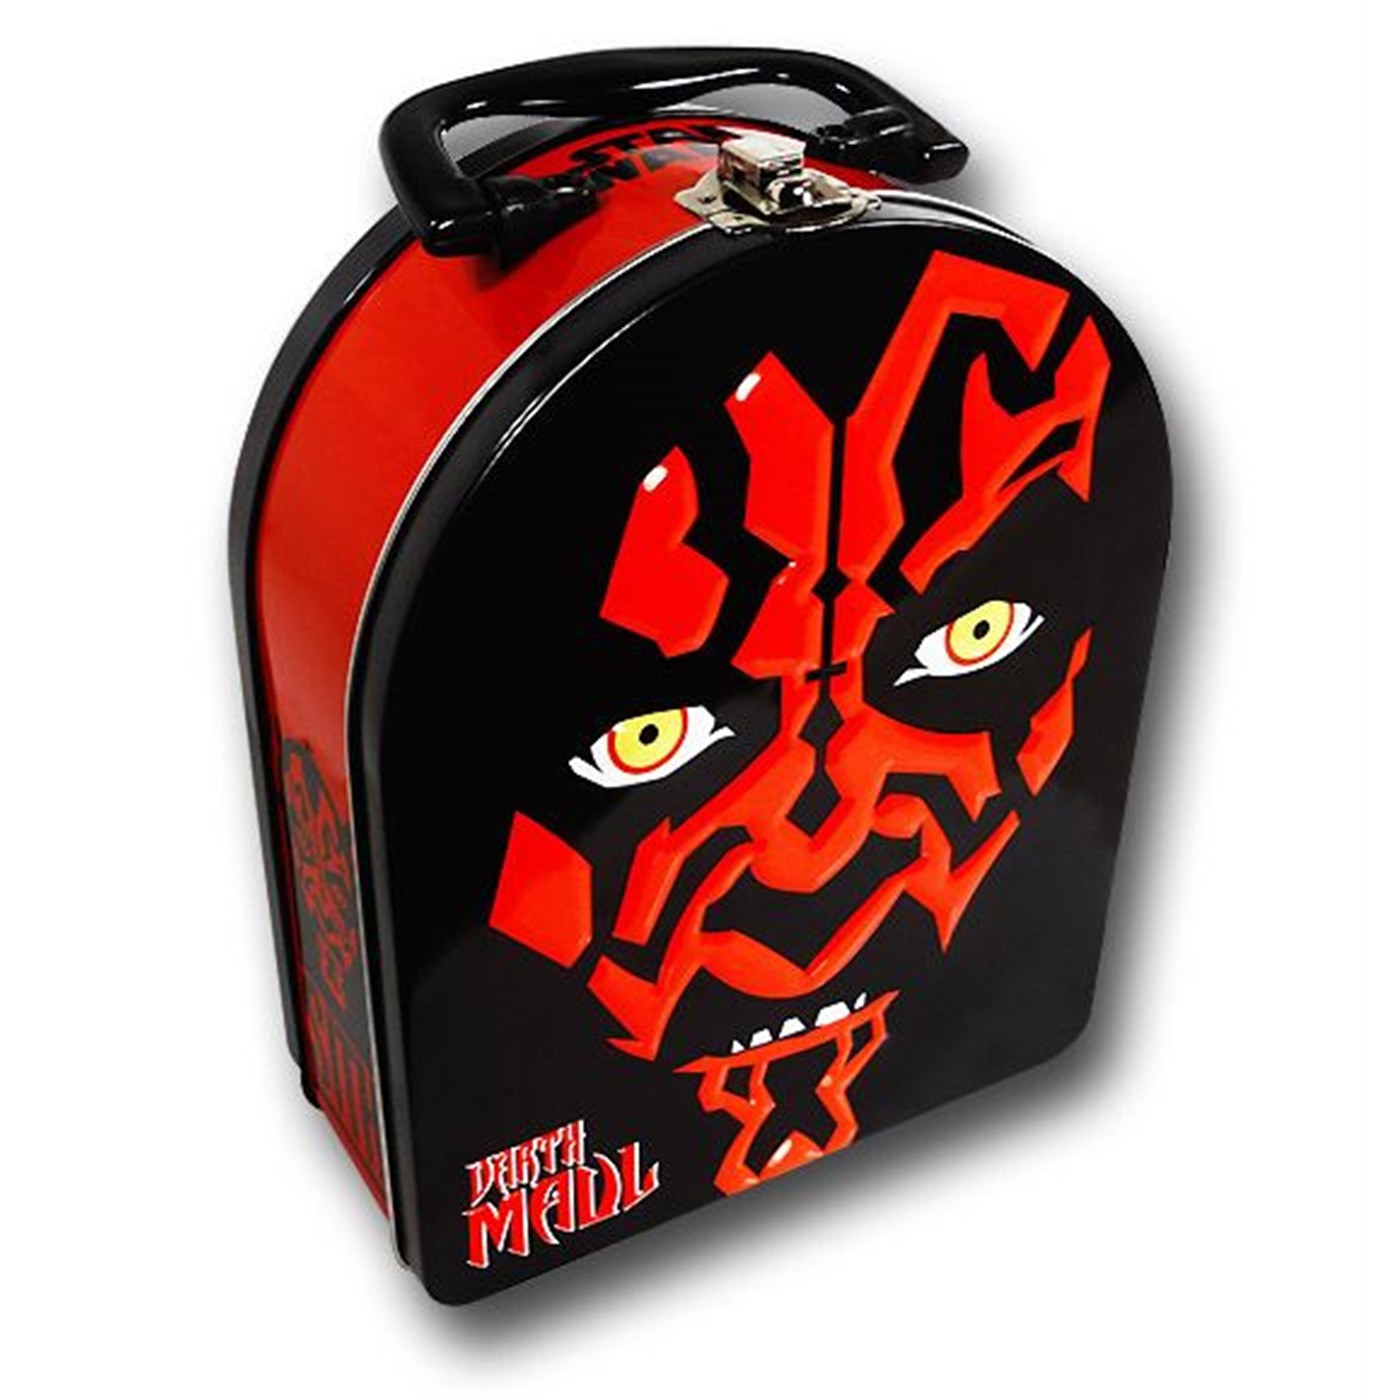 Star Wars Darth Vader and Yoda Tin Lunch Box